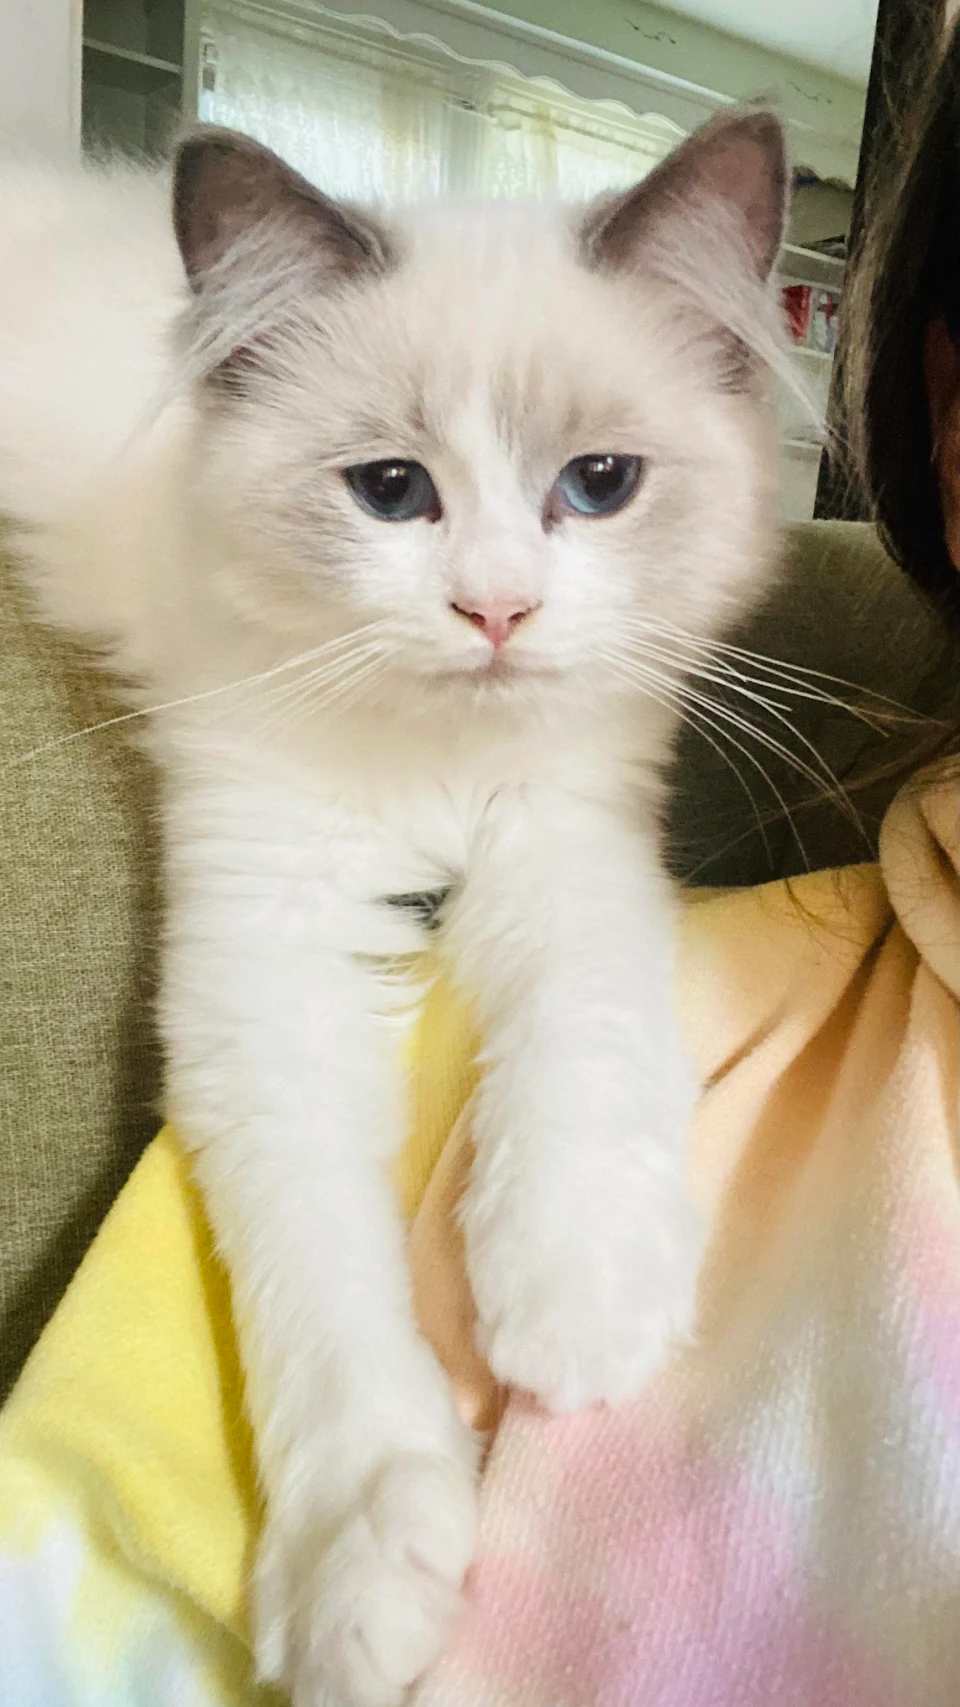 Dear Reddit, this is Monet my shoulder kitten